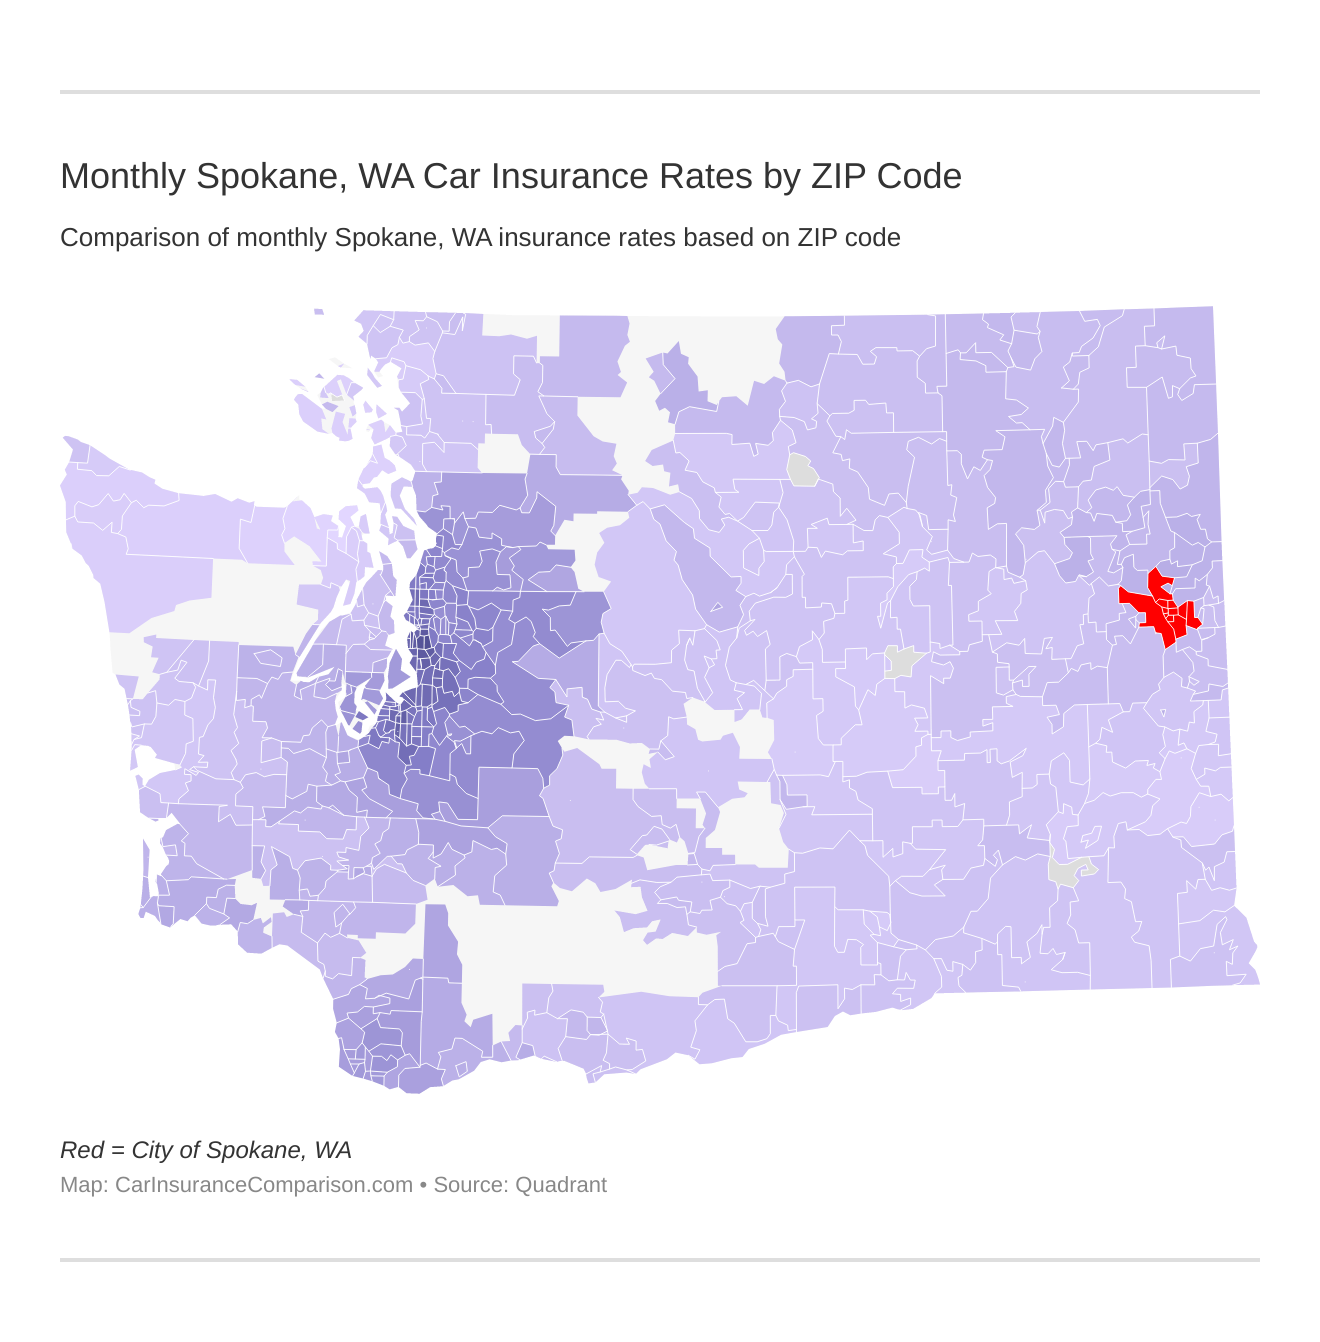 Monthly Spokane, WA Car Insurance Rates by ZIP Code